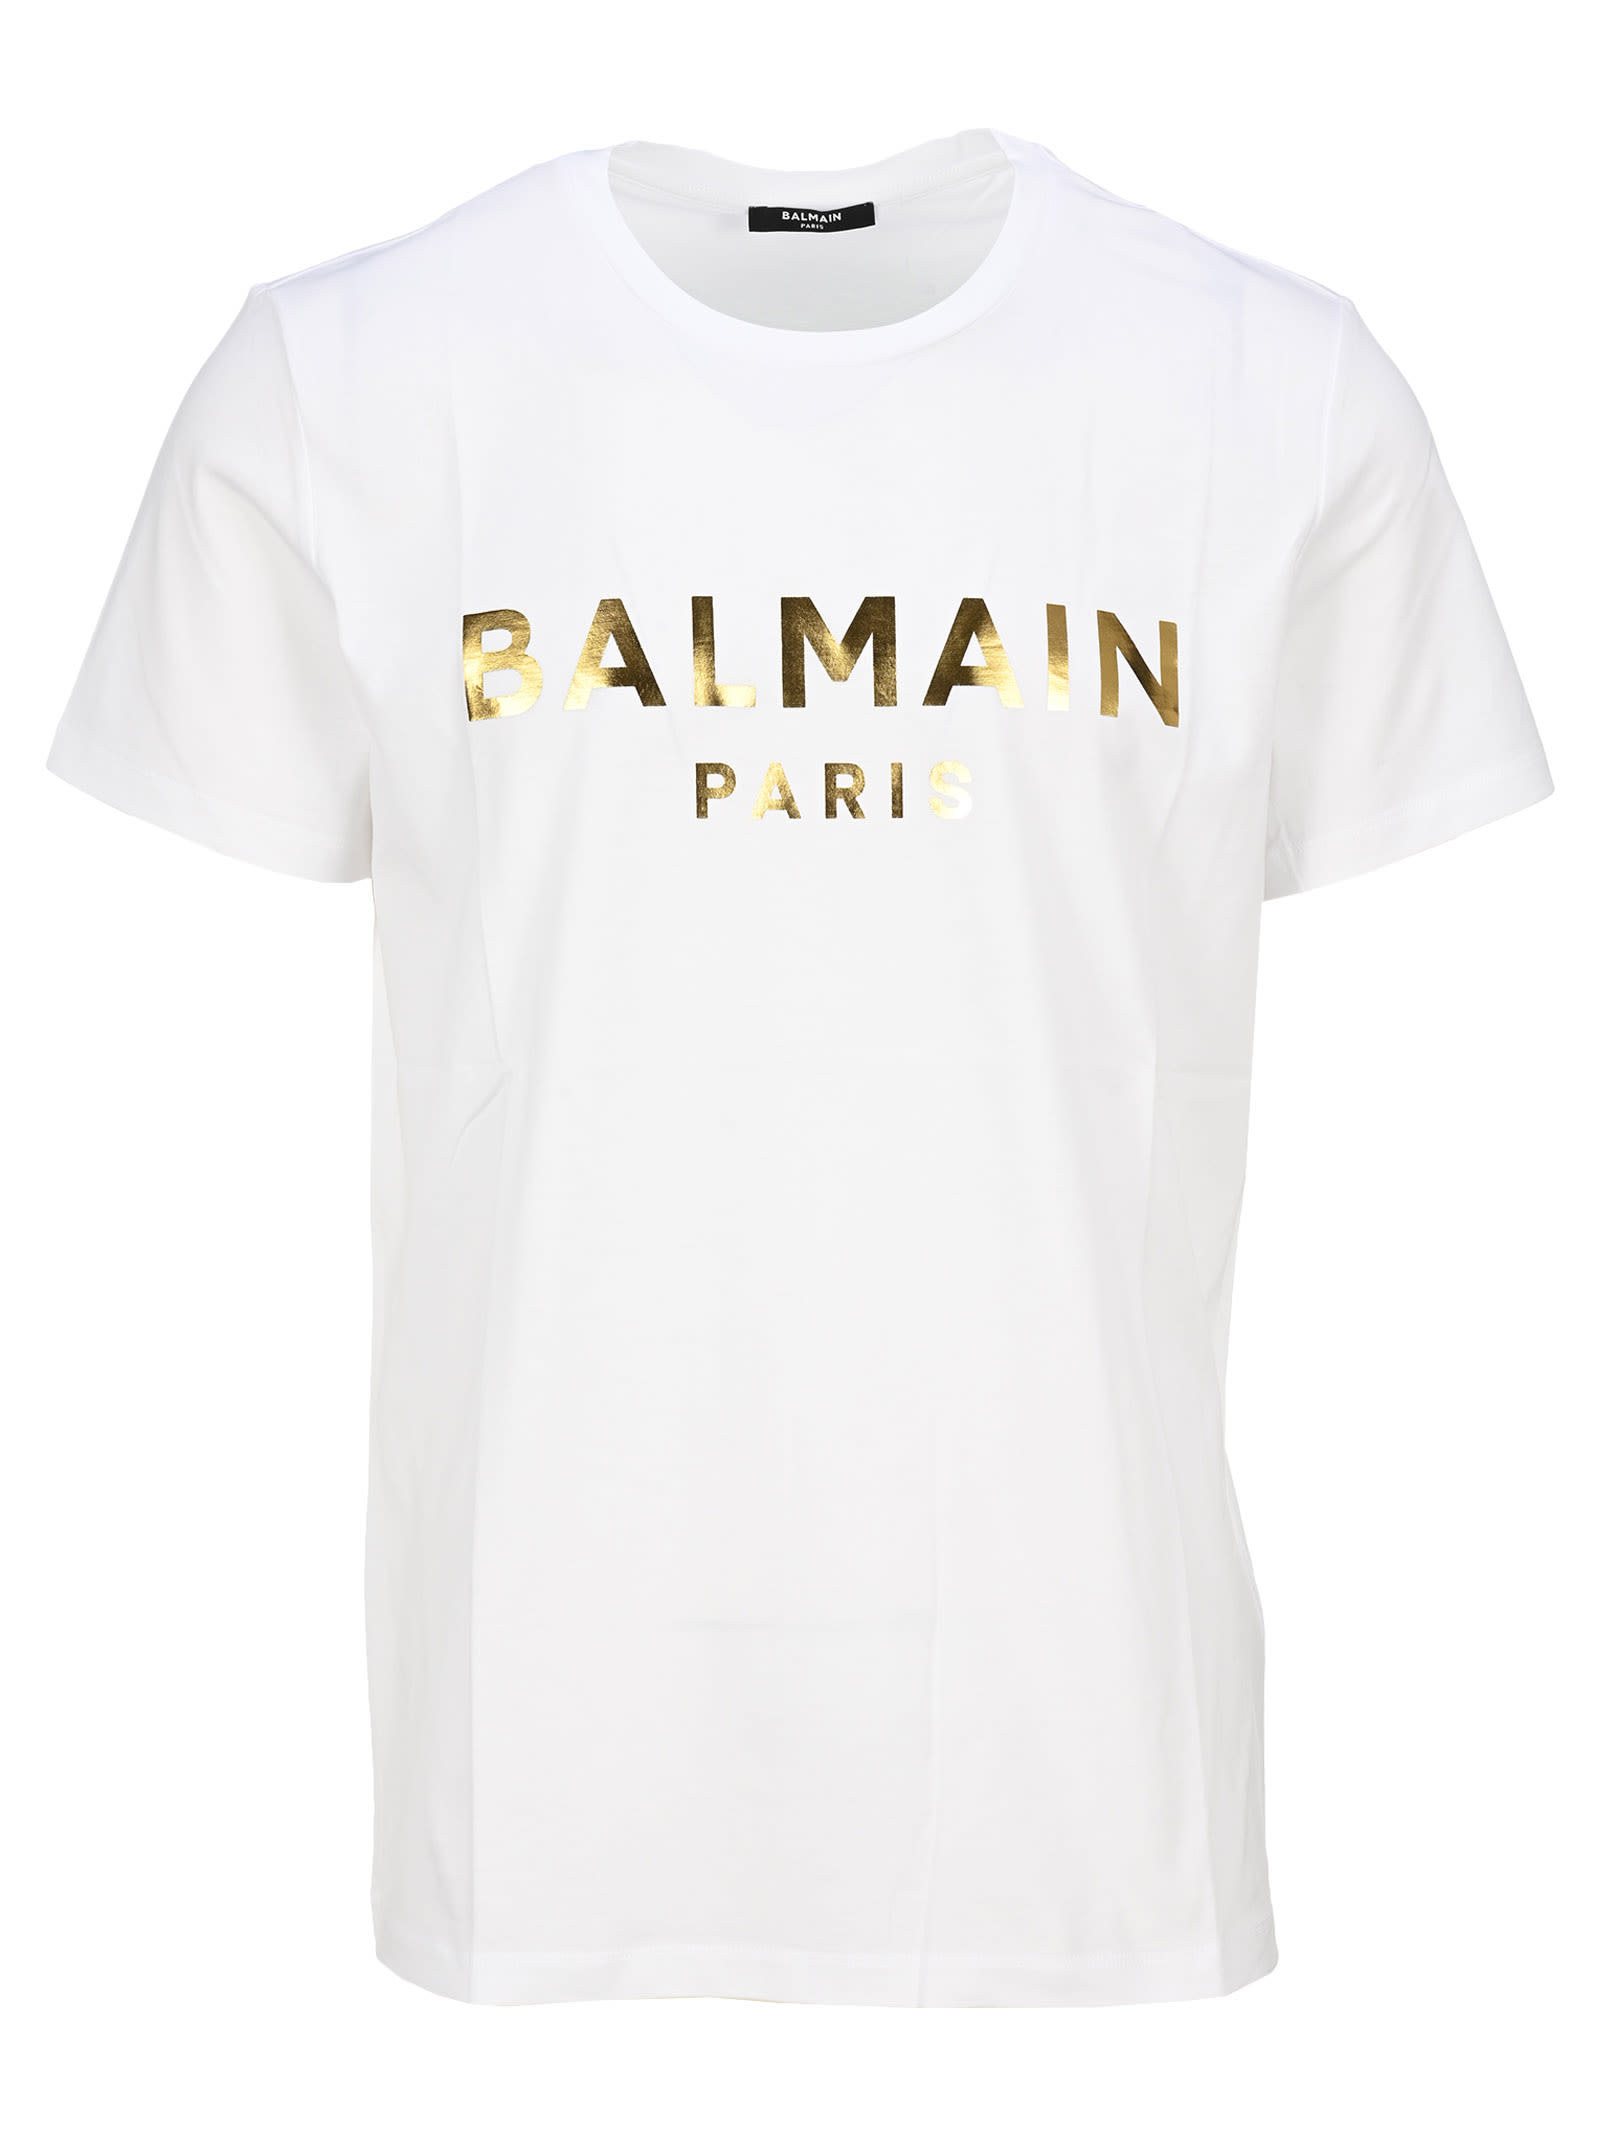 Balmain Metallic Gold Logo T-shirt